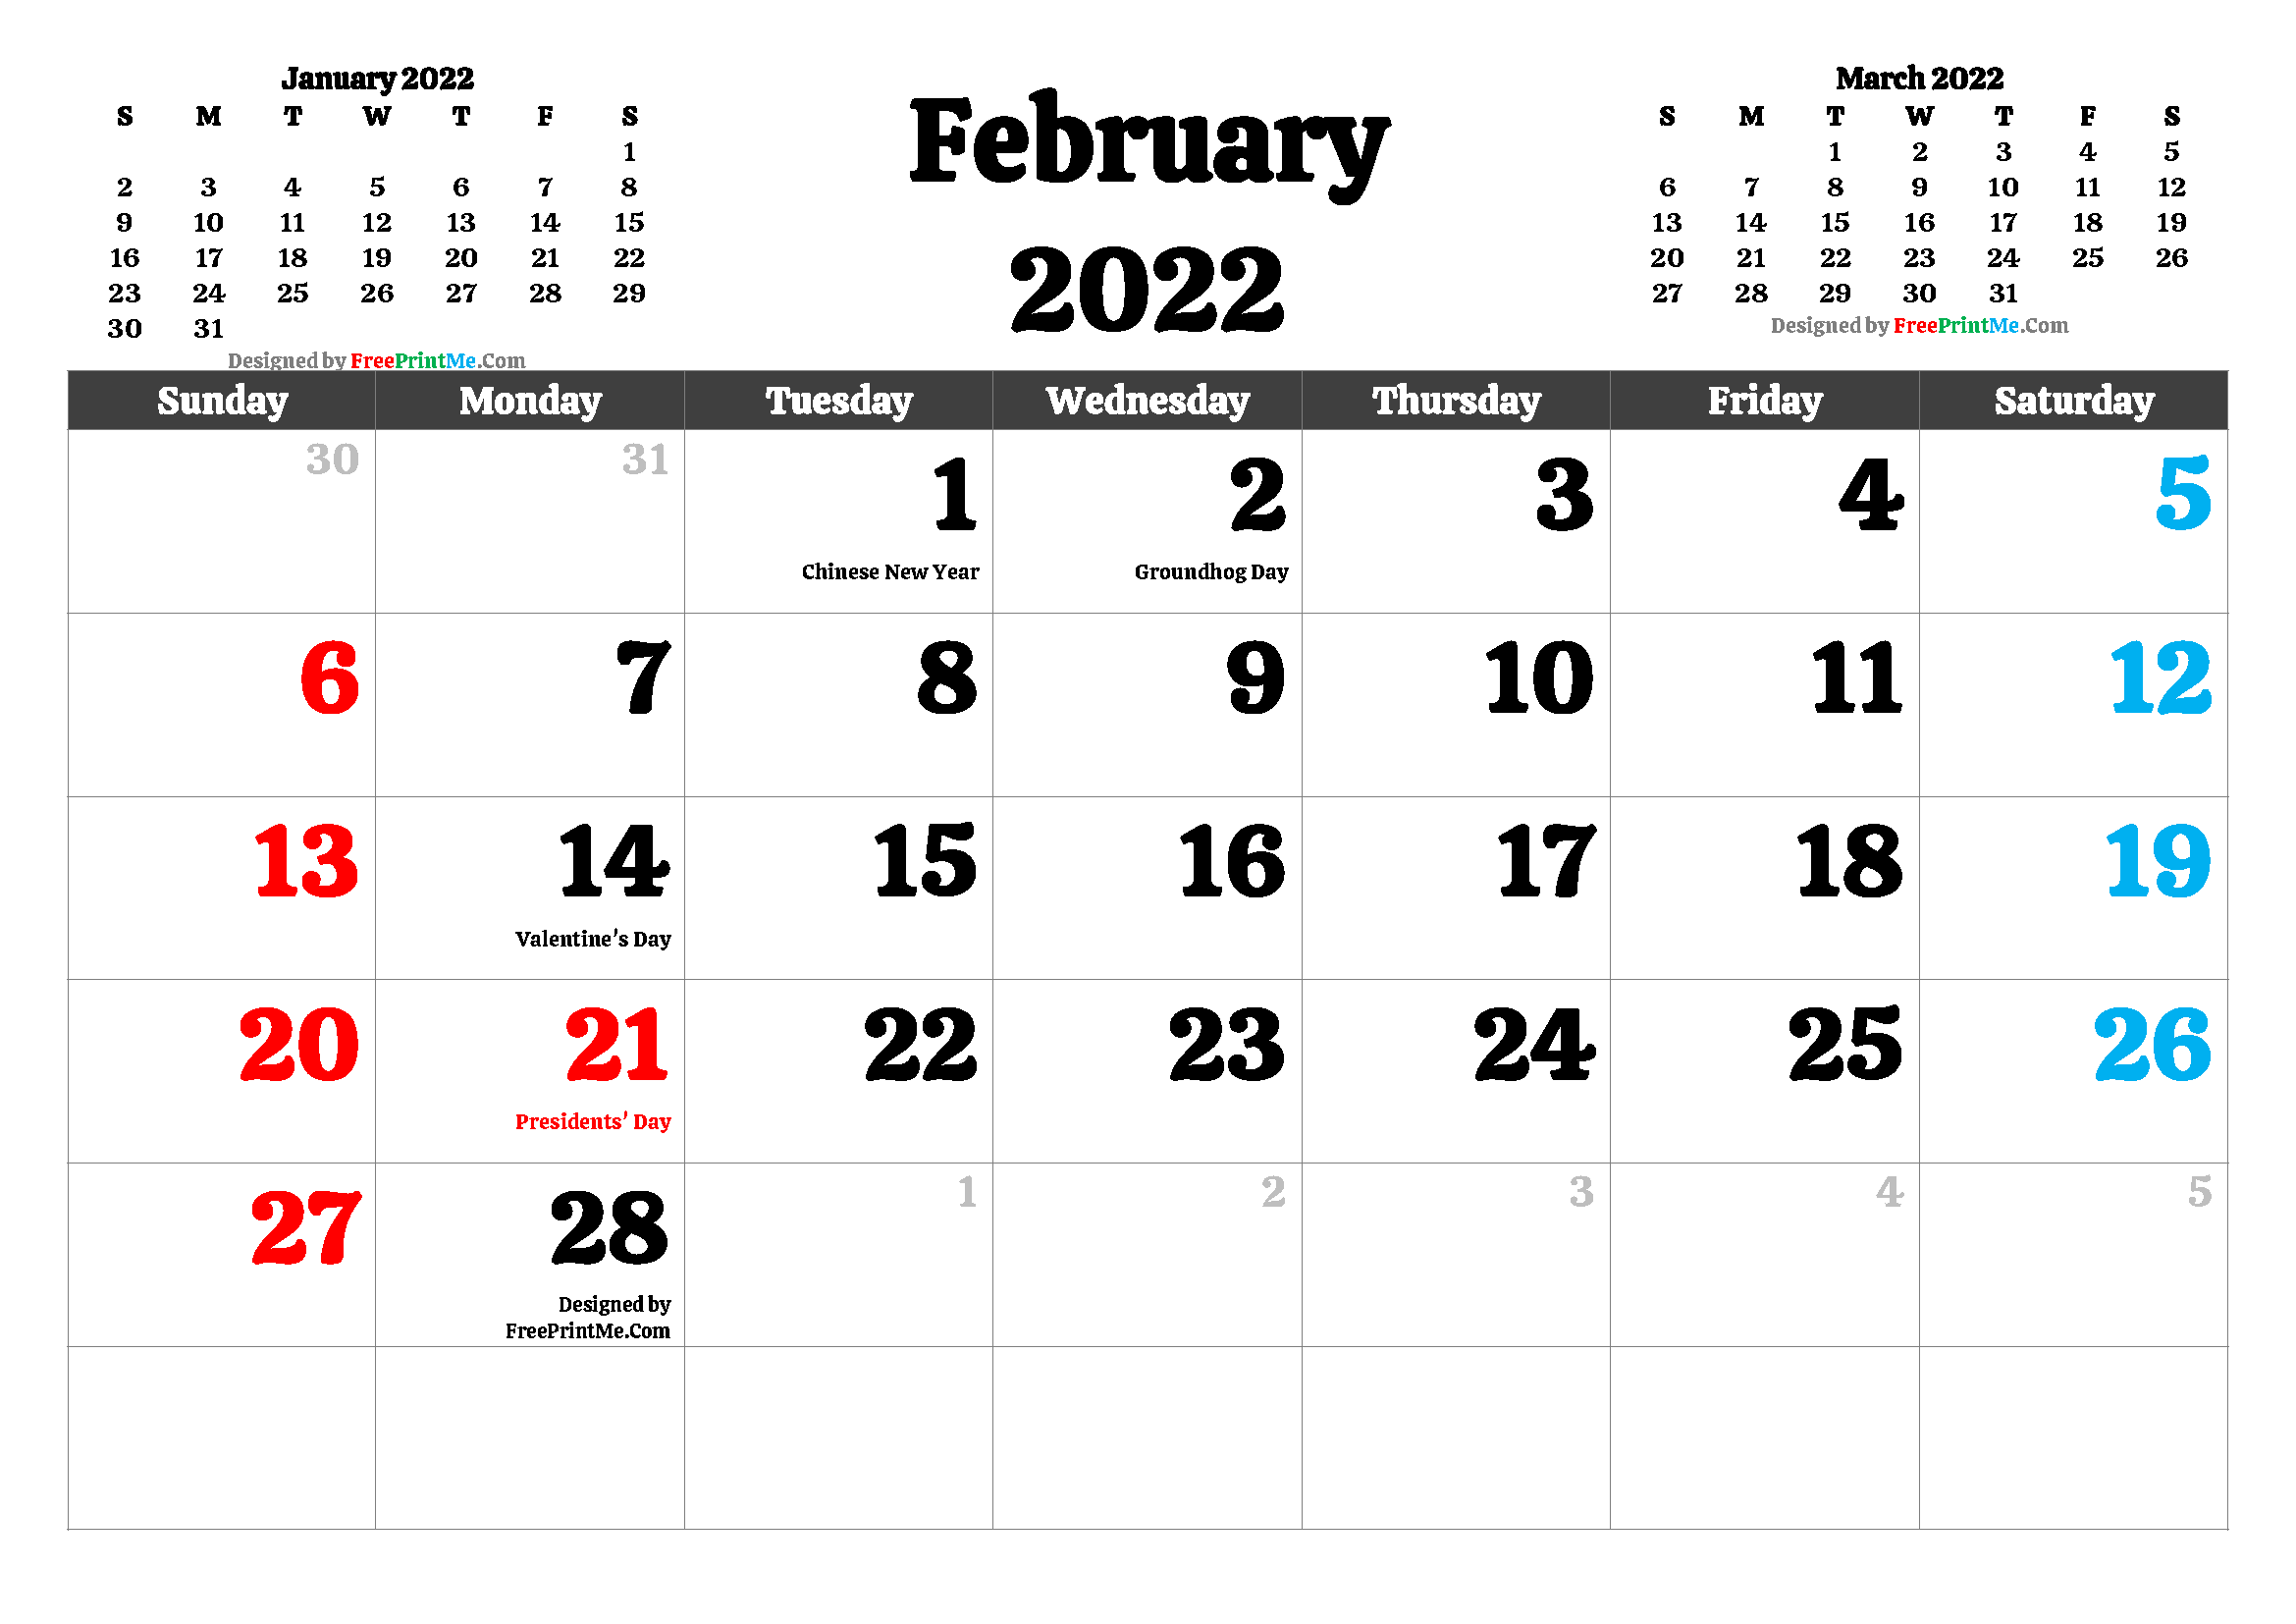 February Calendar 2022 With Holidays Free Printable February 2022 Calendar Pdf And Image